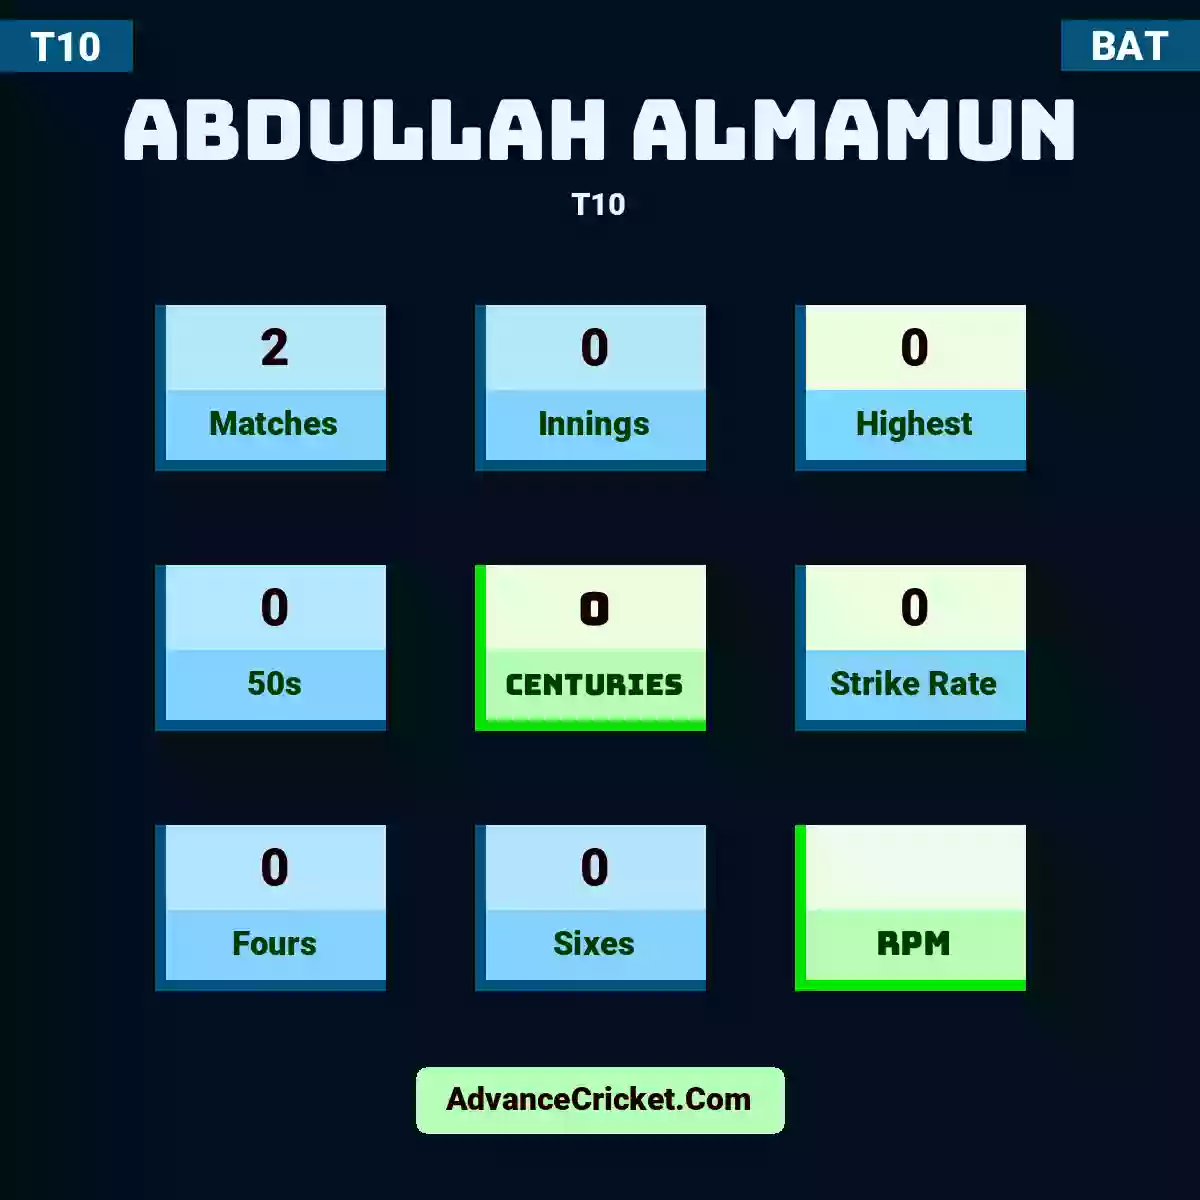 Abdullah Almamun T10 , Abdullah Almamun played 2 matches, scored 0 runs as highest, 0 half-centuries, and 0 centuries, with a strike rate of 0. A.Almamun hit 0 fours and 0 sixes.